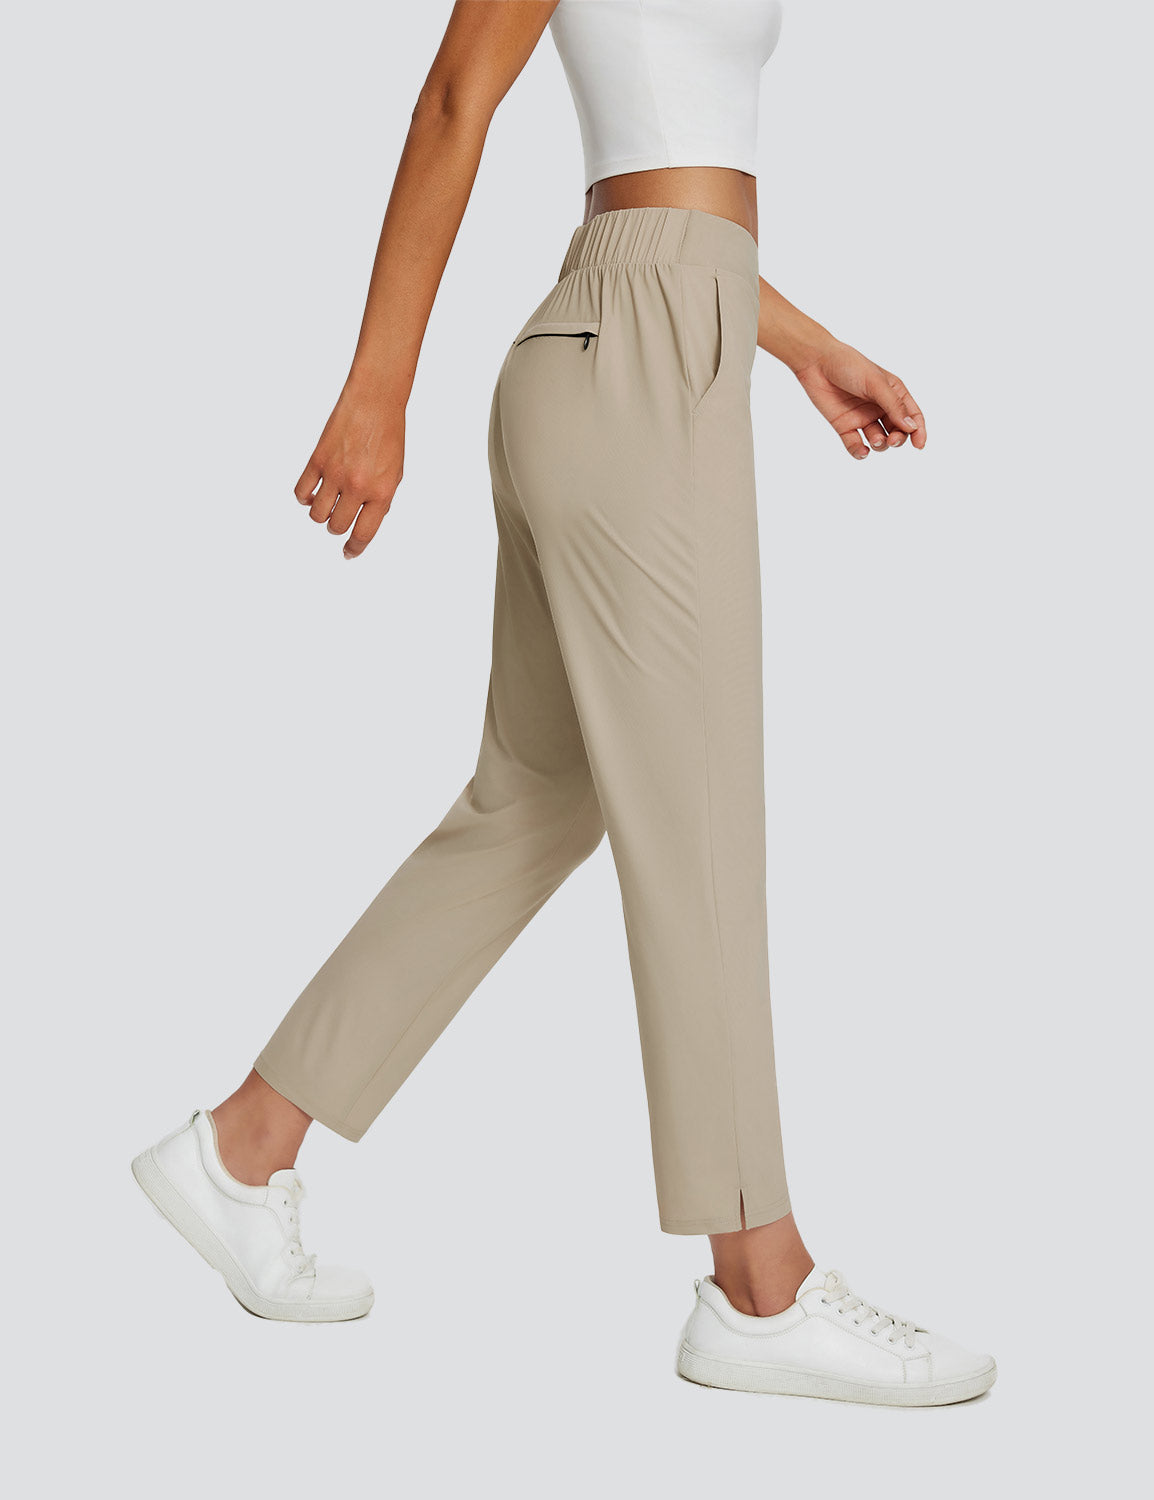 Baleaf Women's Stretchy Ankle-length High-rise Pants Doeskin Side